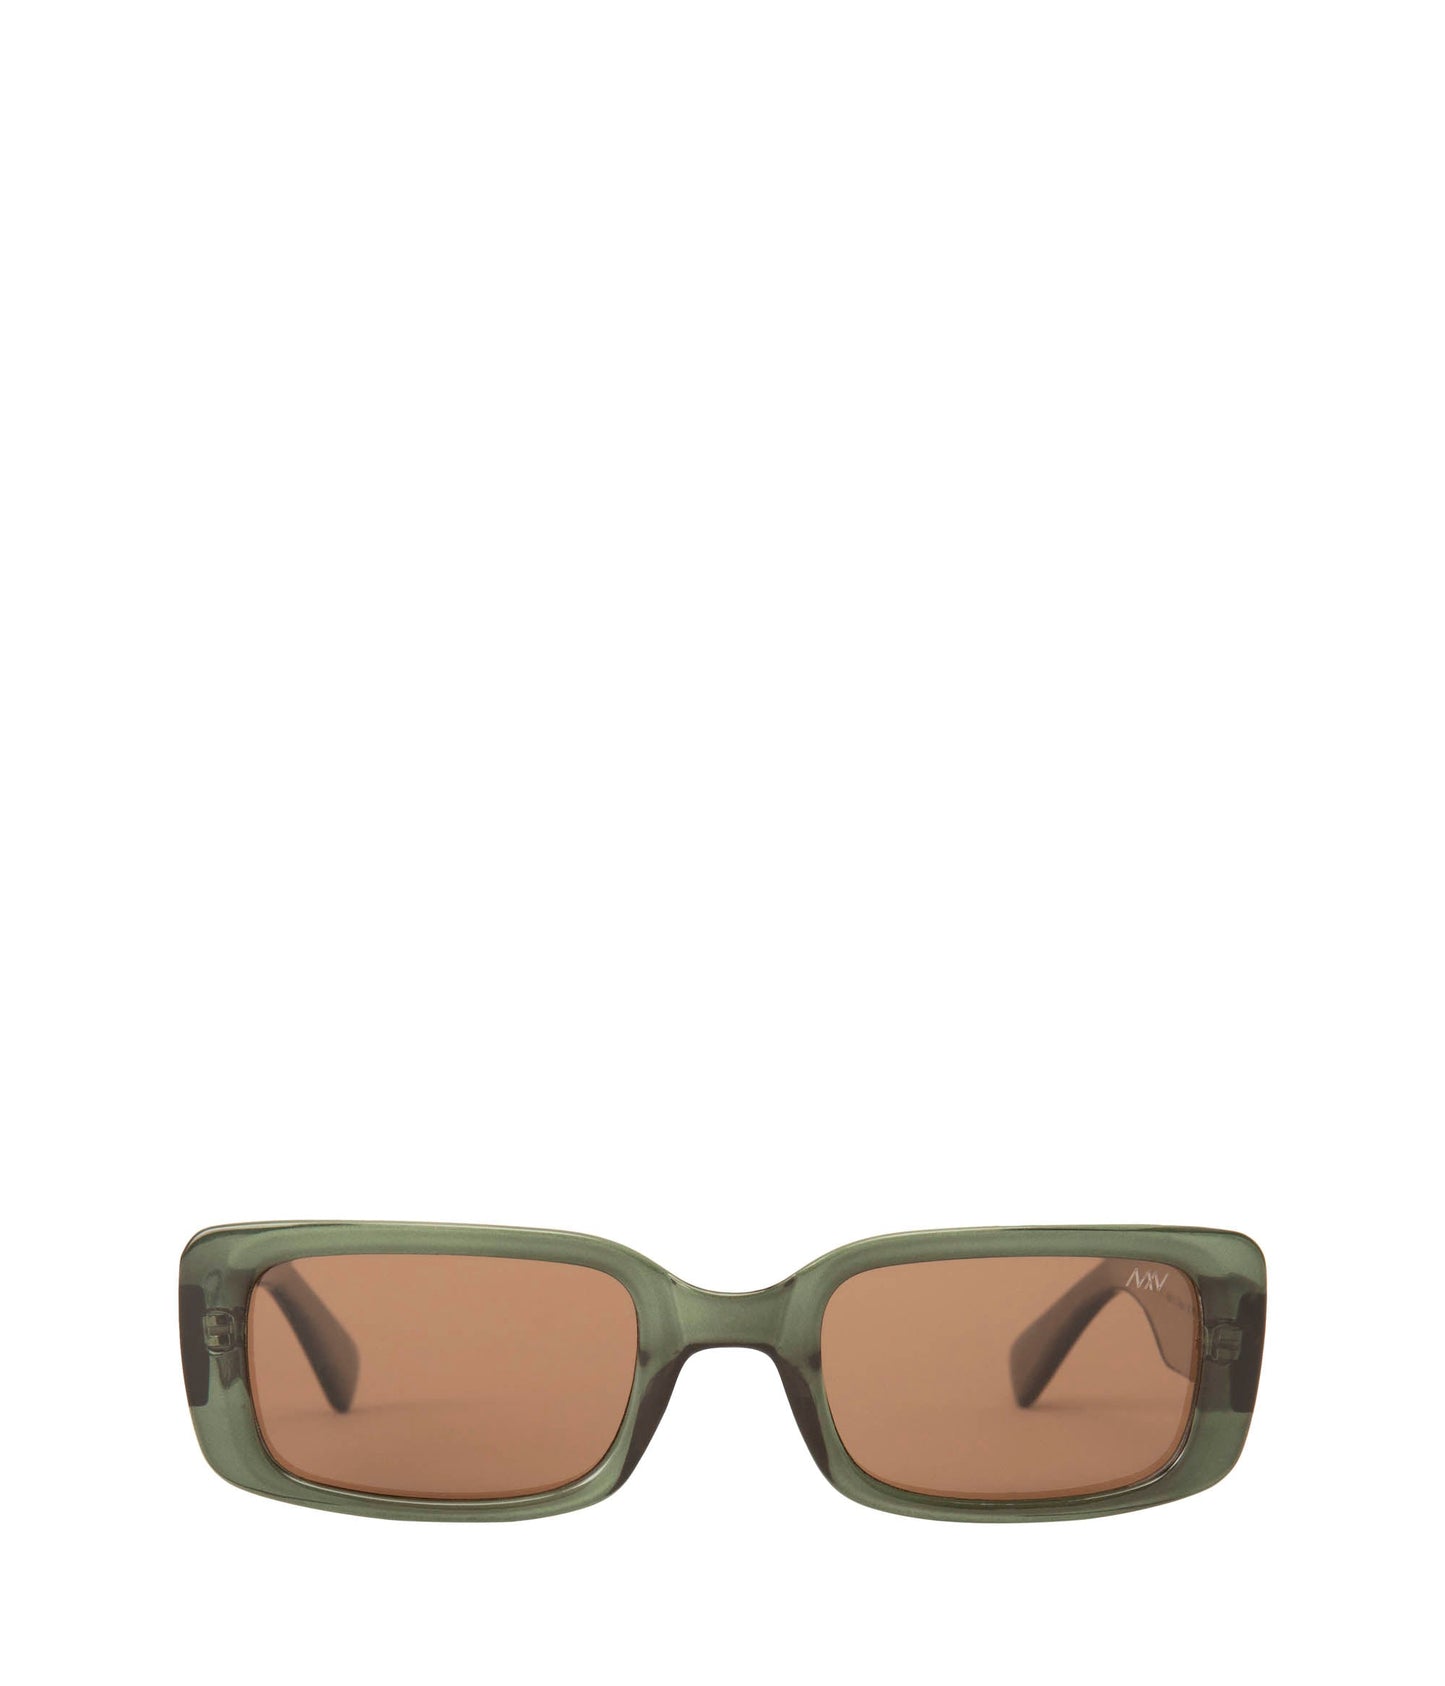 MEEKA Sunglasses | Color: Green - variant::green